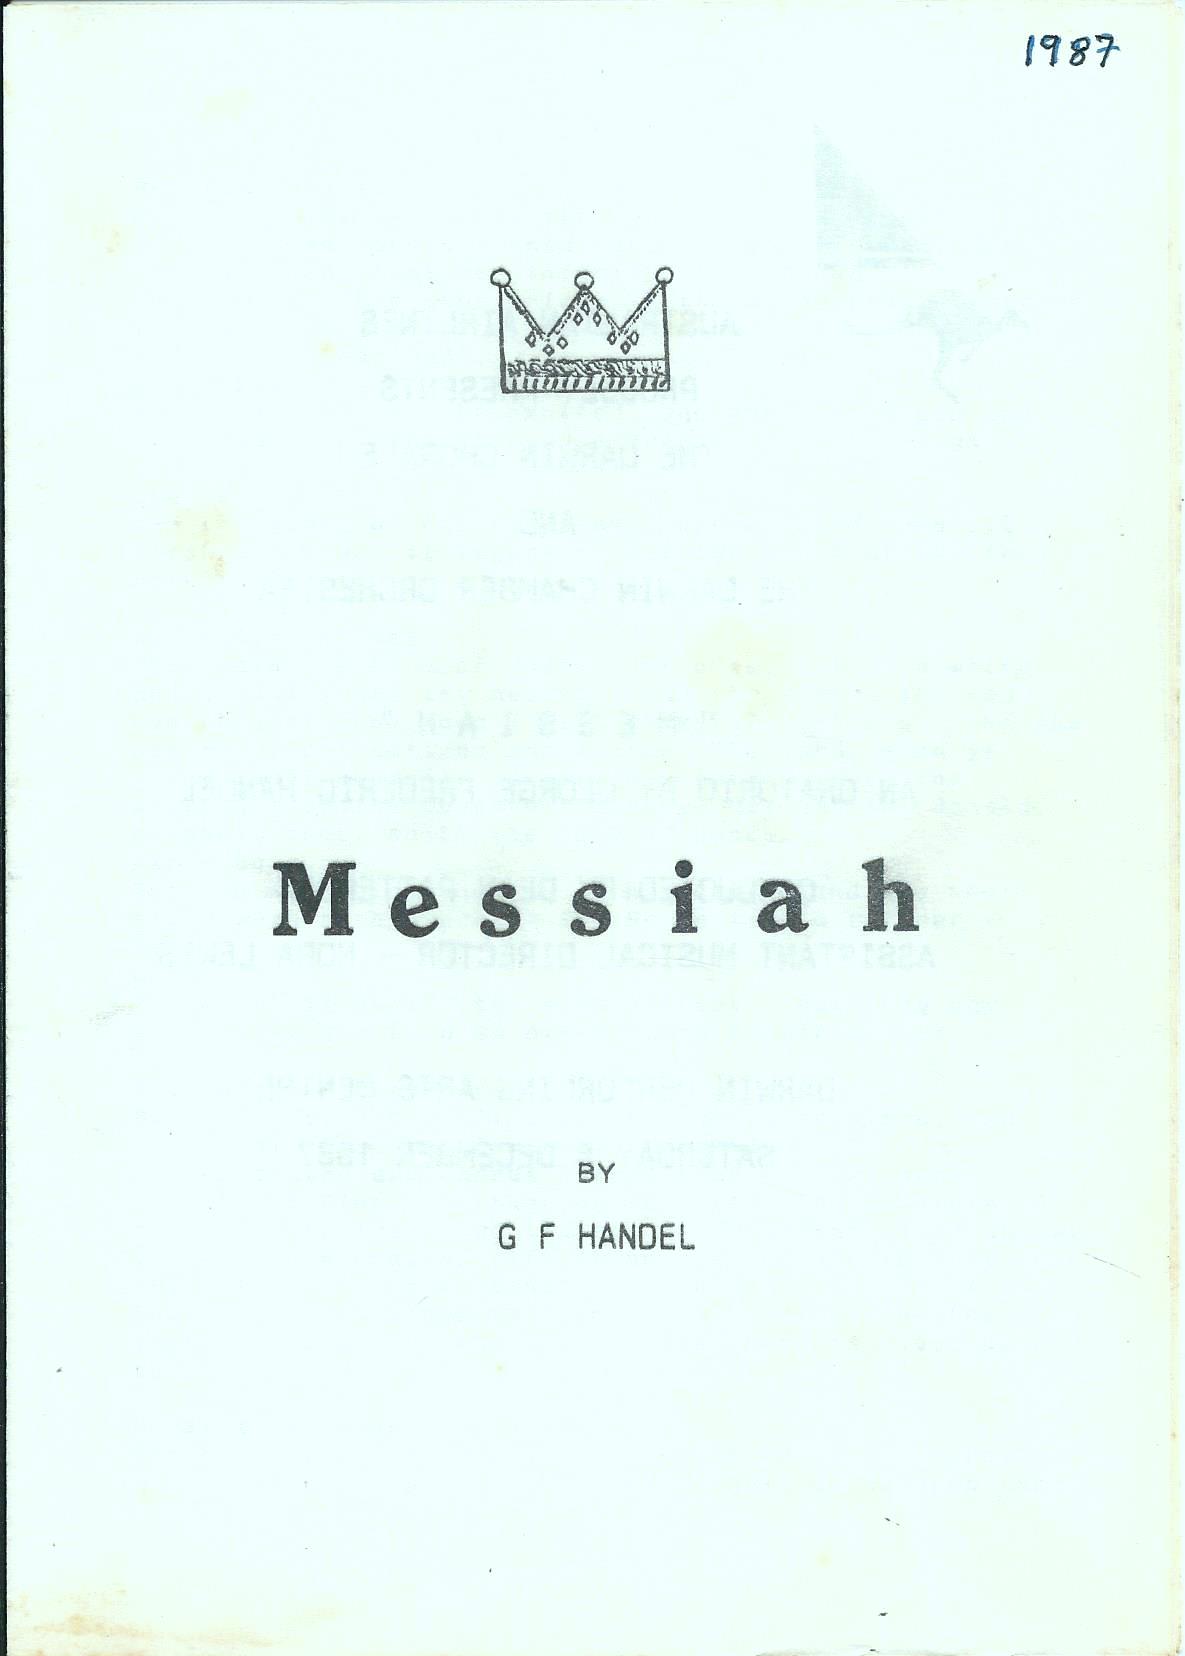 Messiah 1987